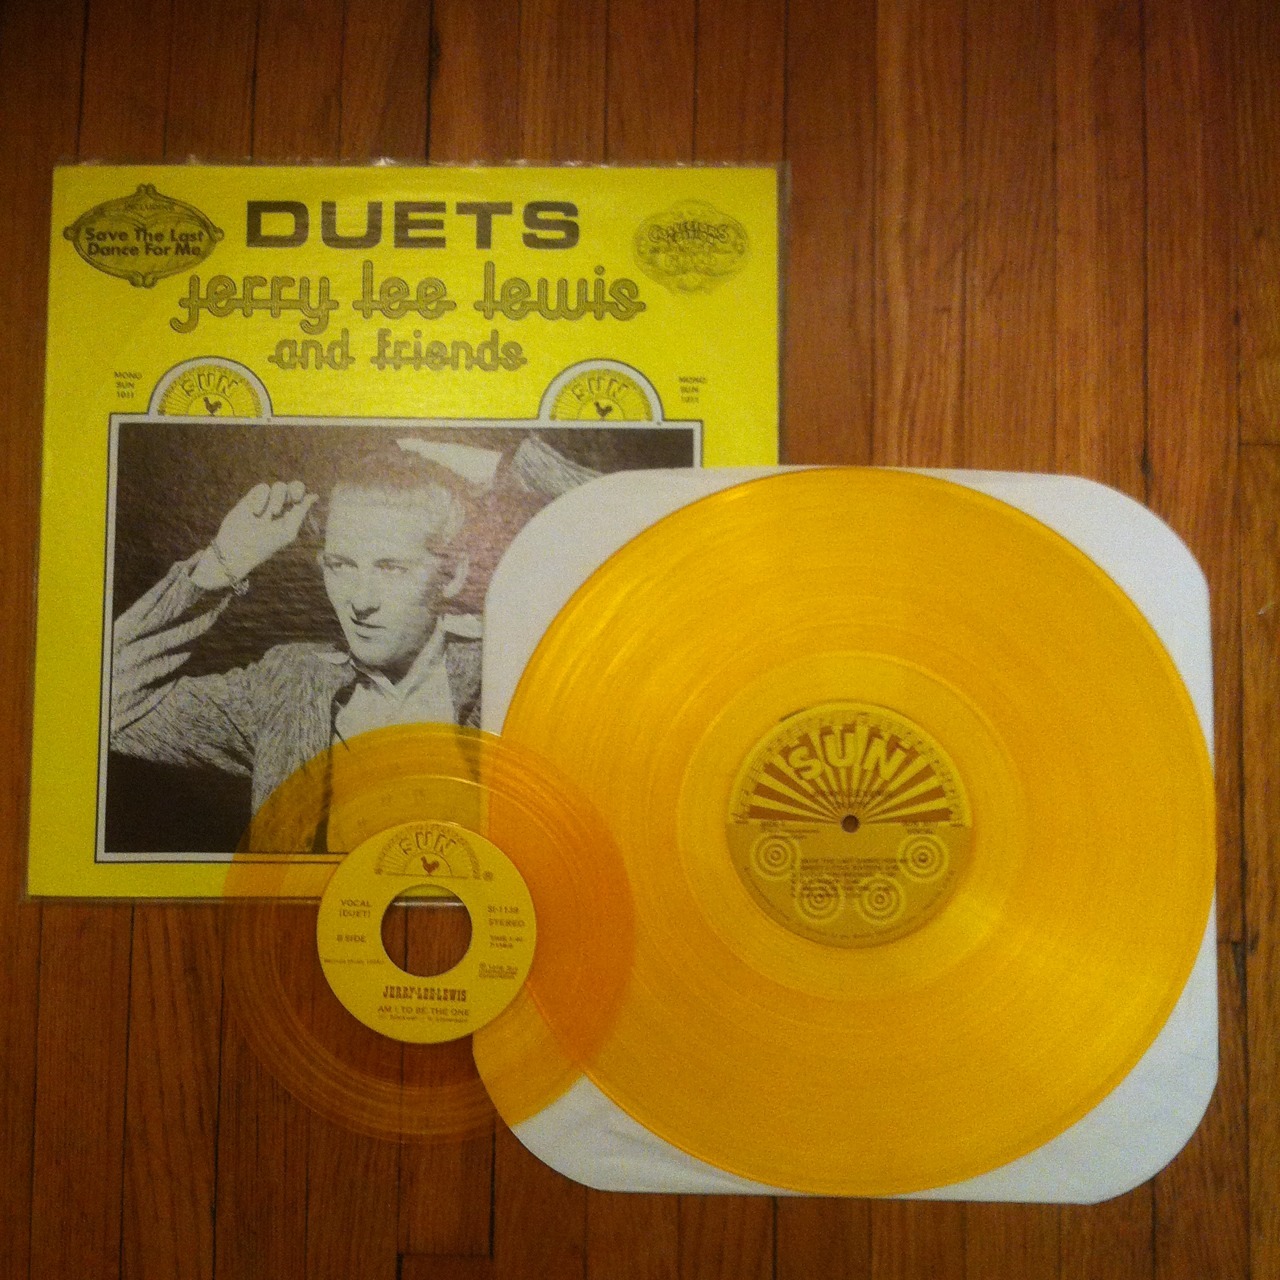 coppertop-fox:  Jerry Lee Lewis &amp; Friends - Duets Love that Sun Studio yellow